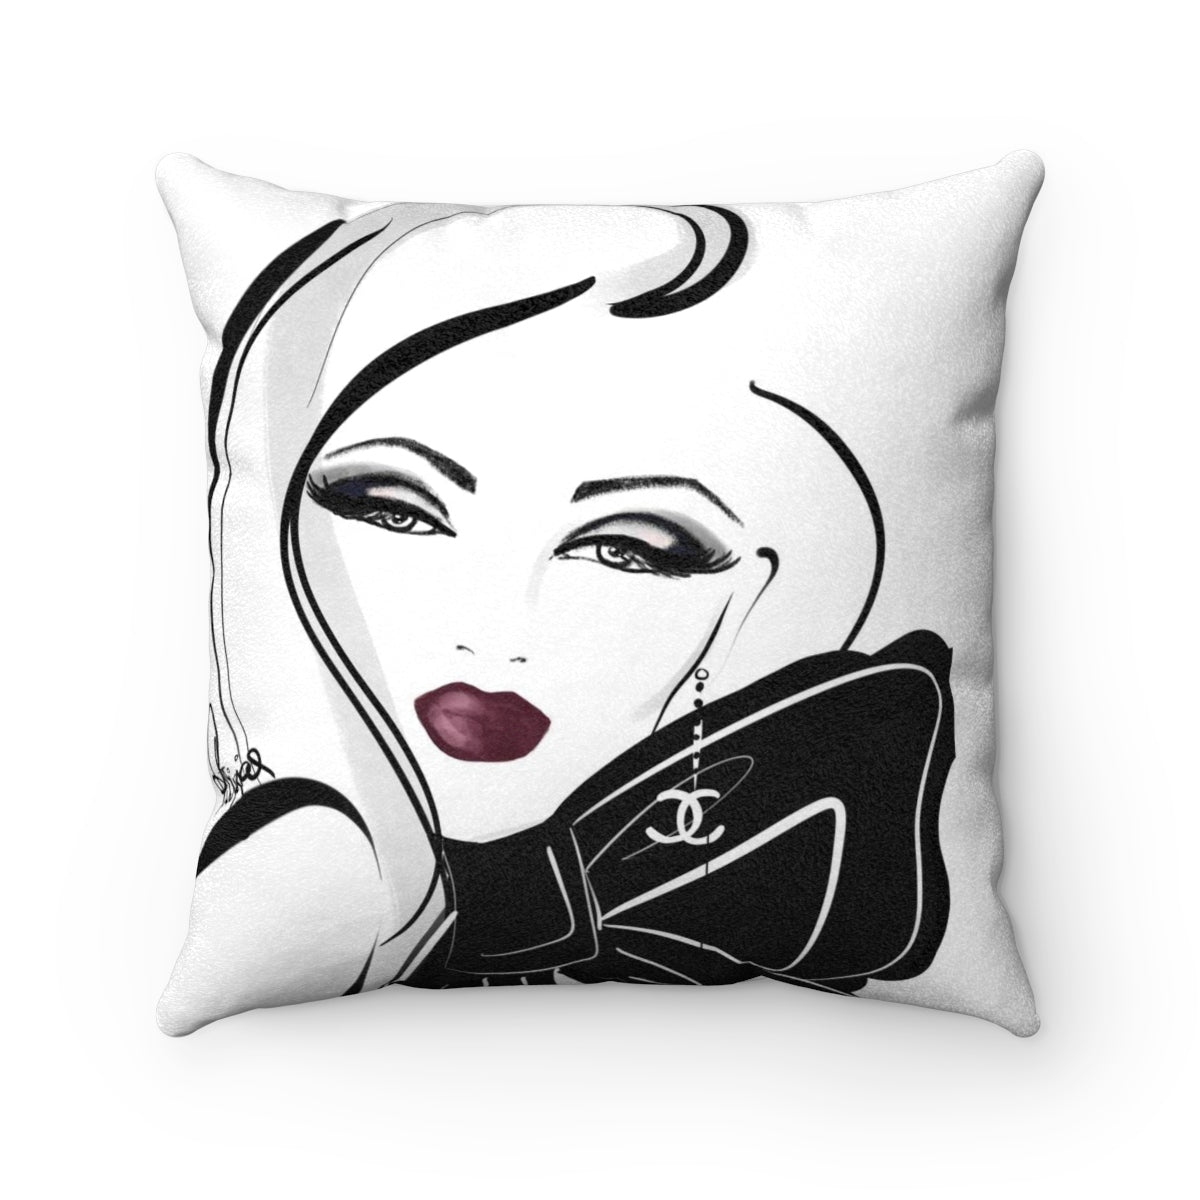 Glam Cushion - Magnifique'